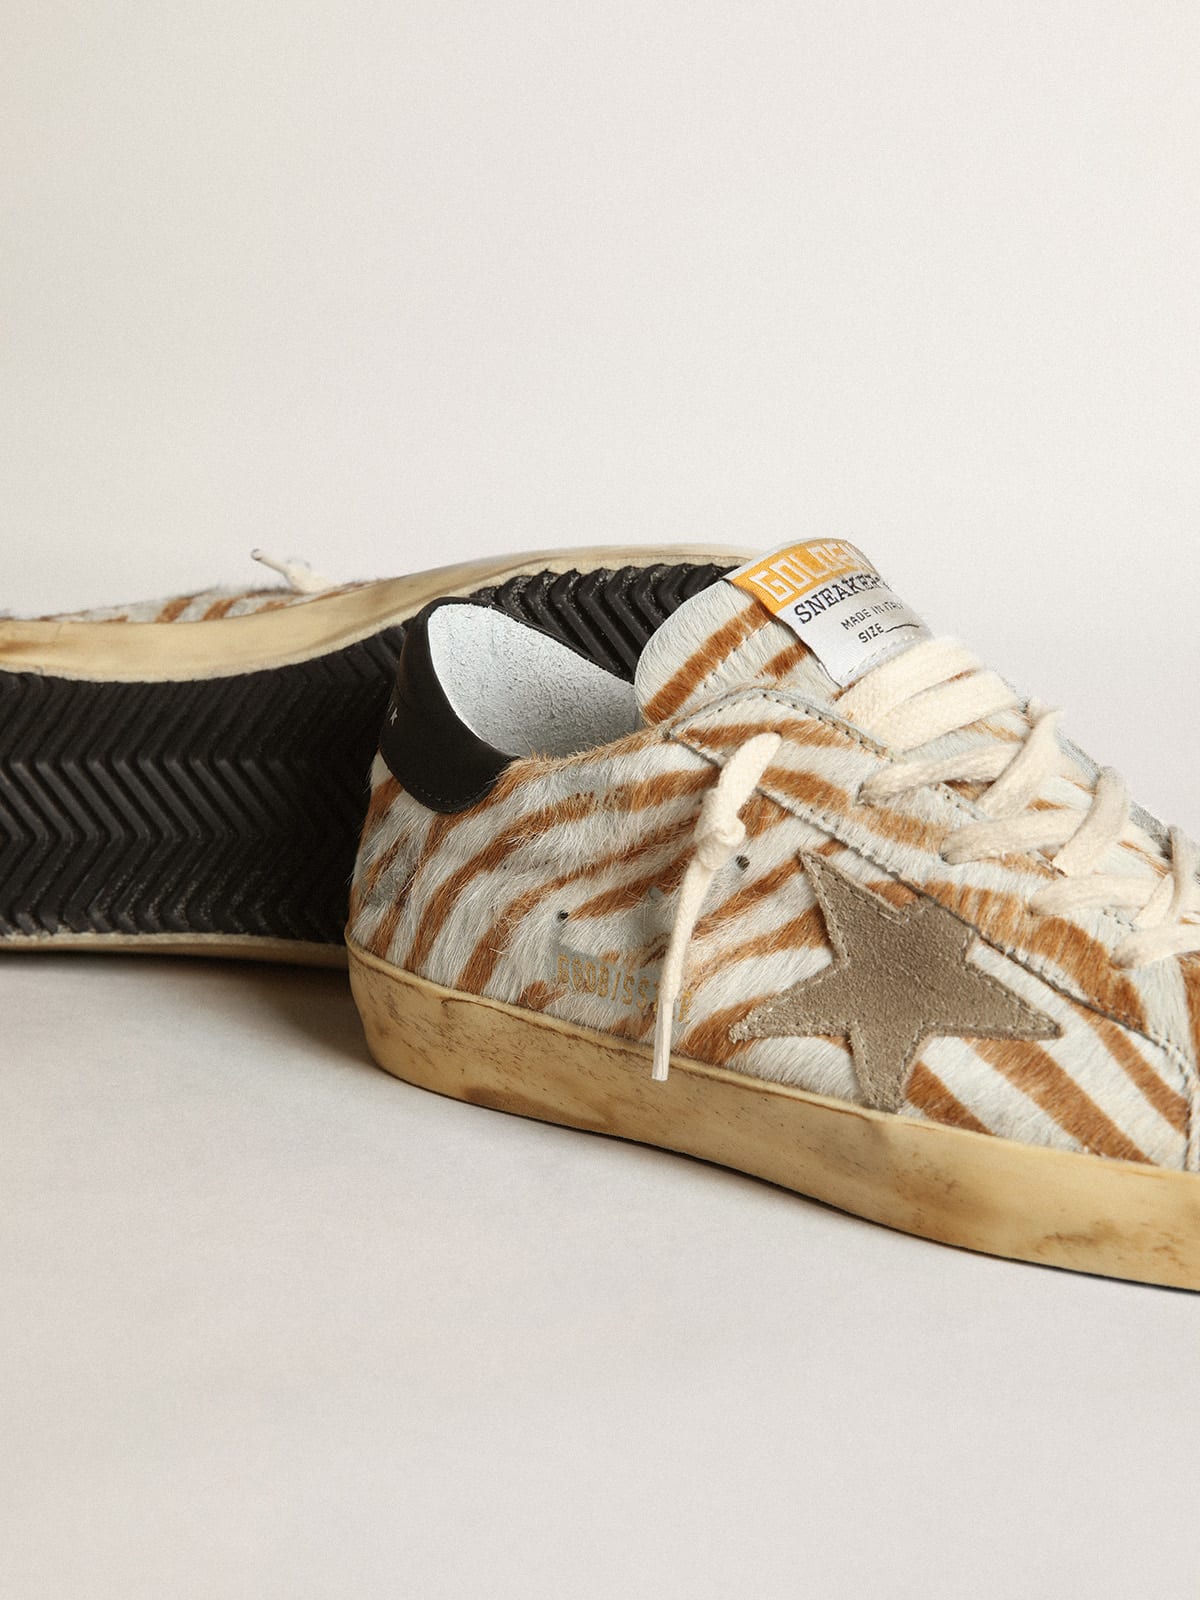 Golden Goose - Women’s Super-Star sneakers in zebra-print pony skin with dove-gray suede star in 